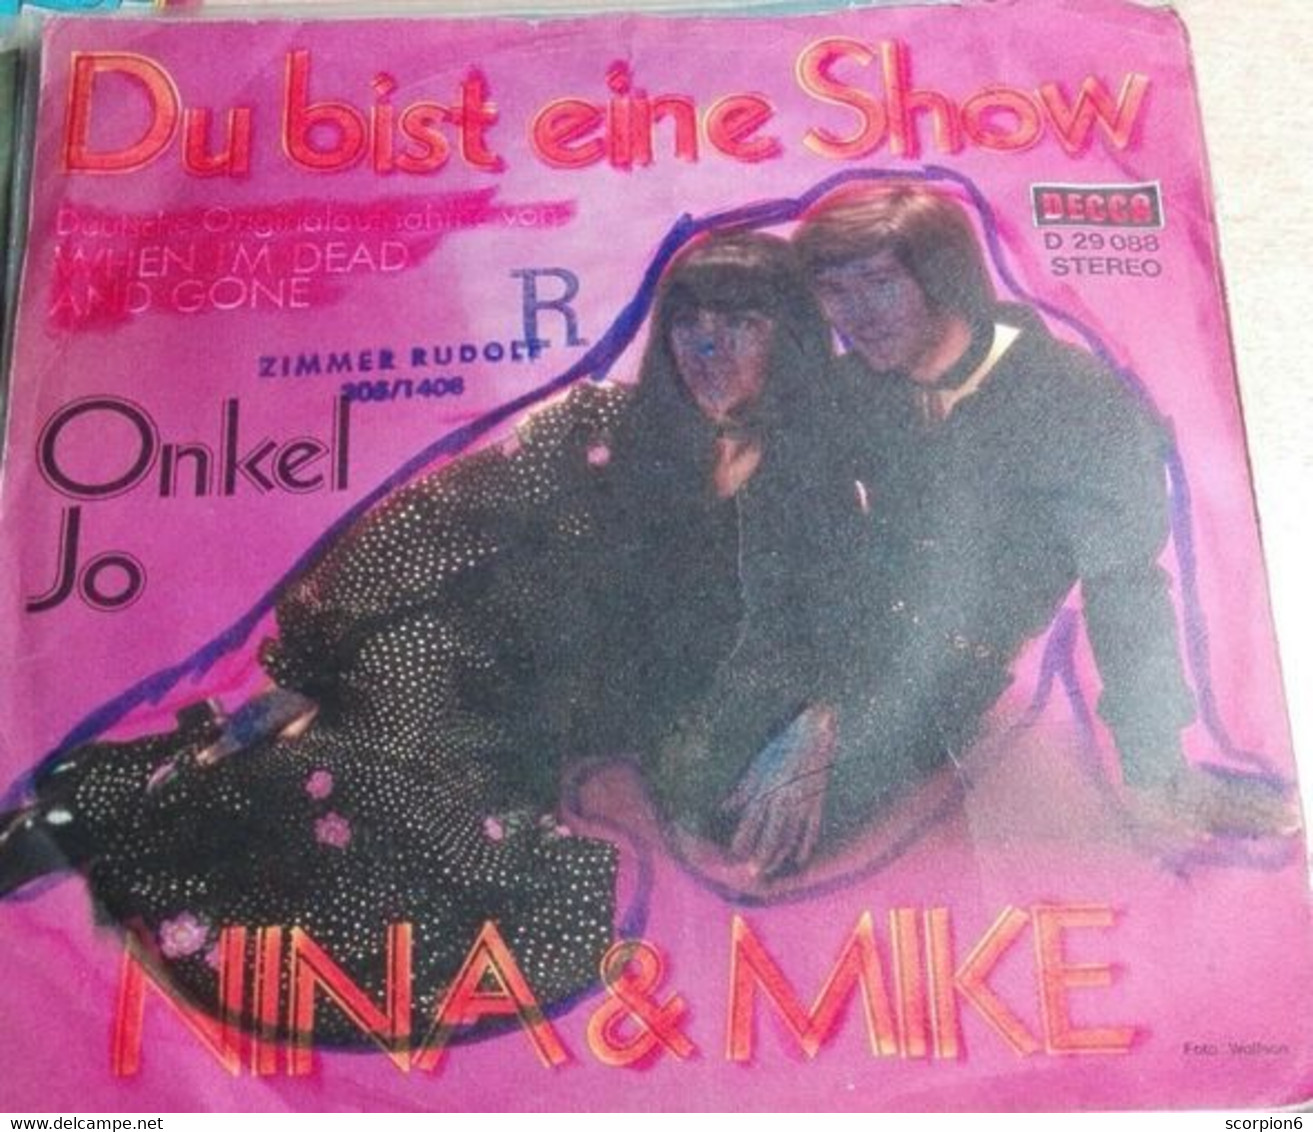 7" Single - Nina & Mike - Du Bist Eine Show - Andere - Duitstalig